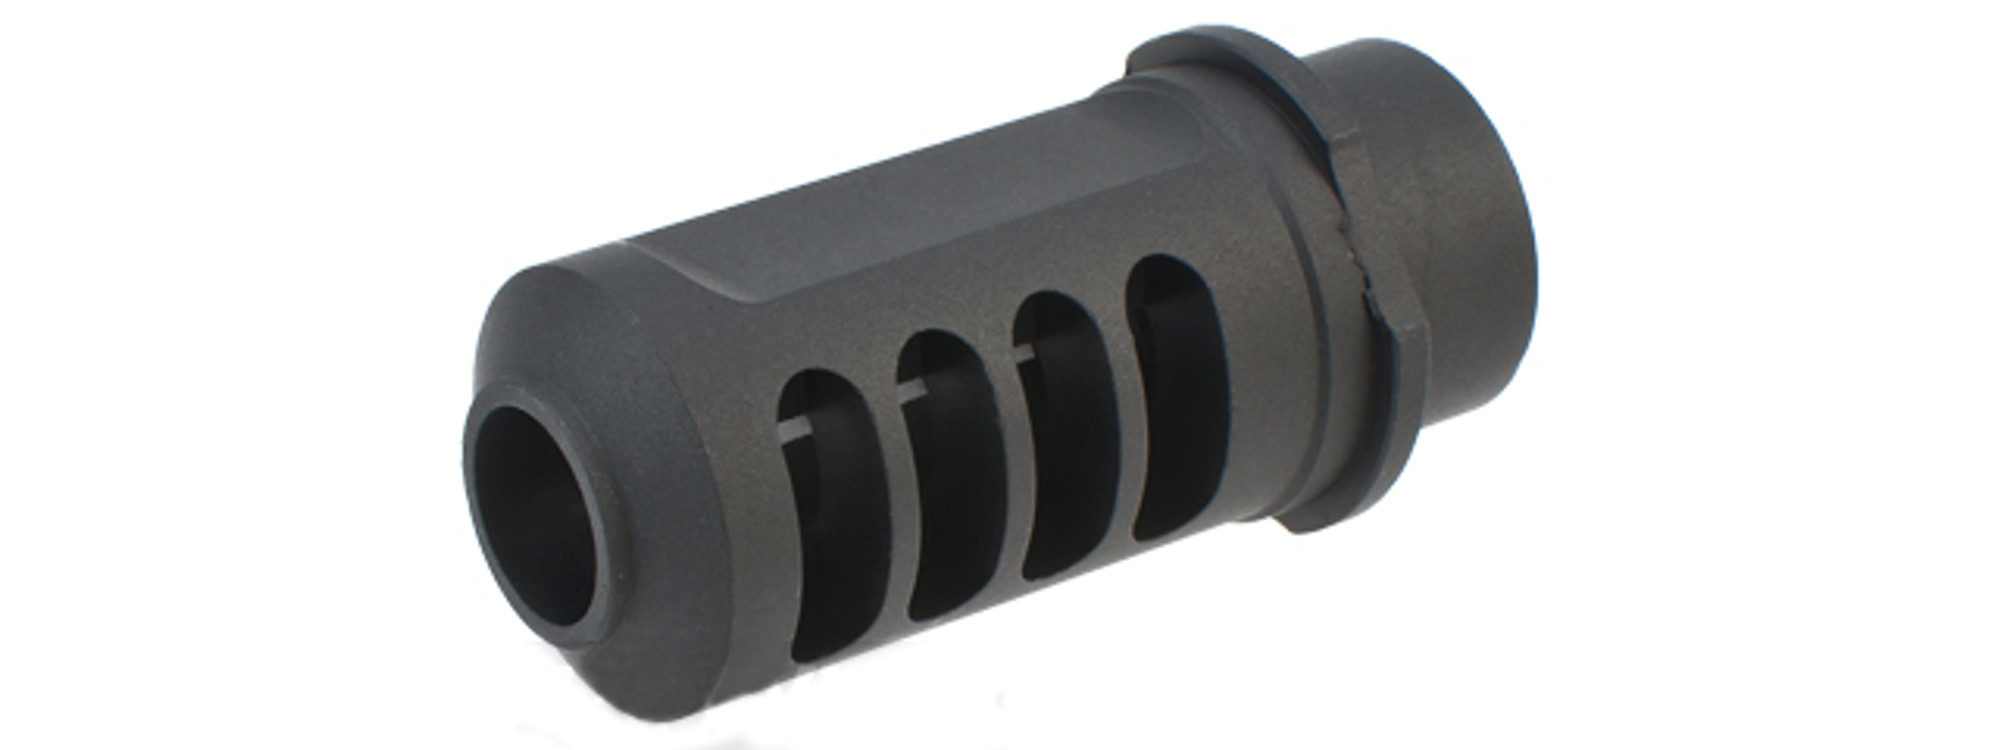 SHS Tank Carbine Aluminum Airsoft Muzzle Brake  Flash Hider - 14mm Negative